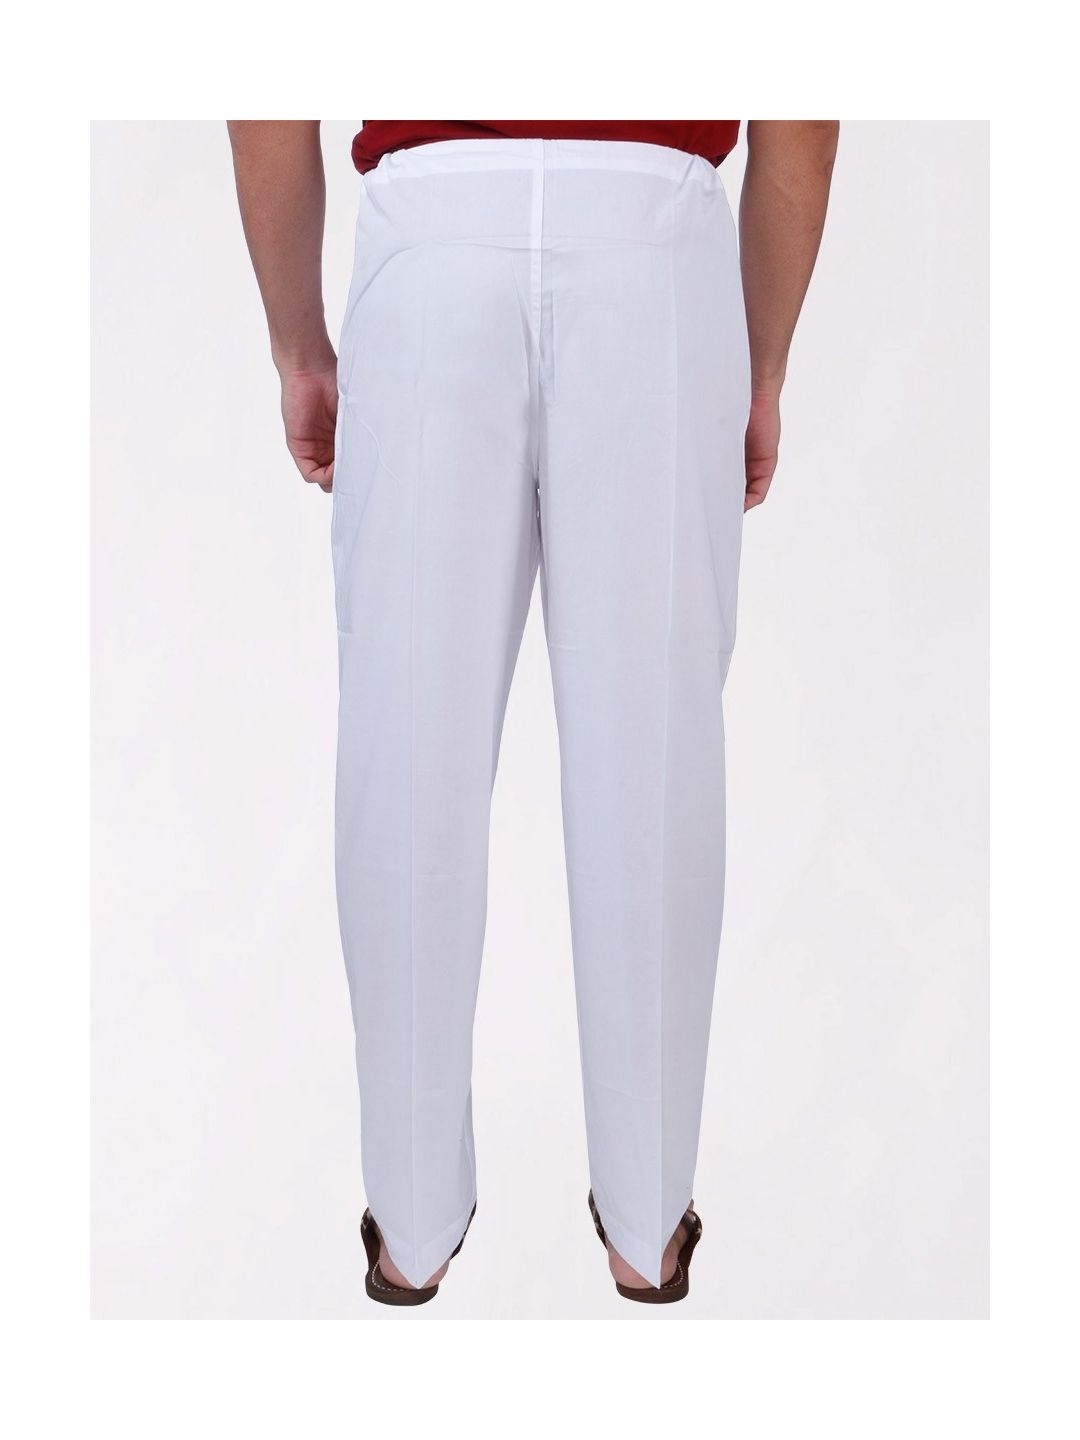 Buy Olive Green Trousers  Pants for Men by Garcon Online  Ajiocom